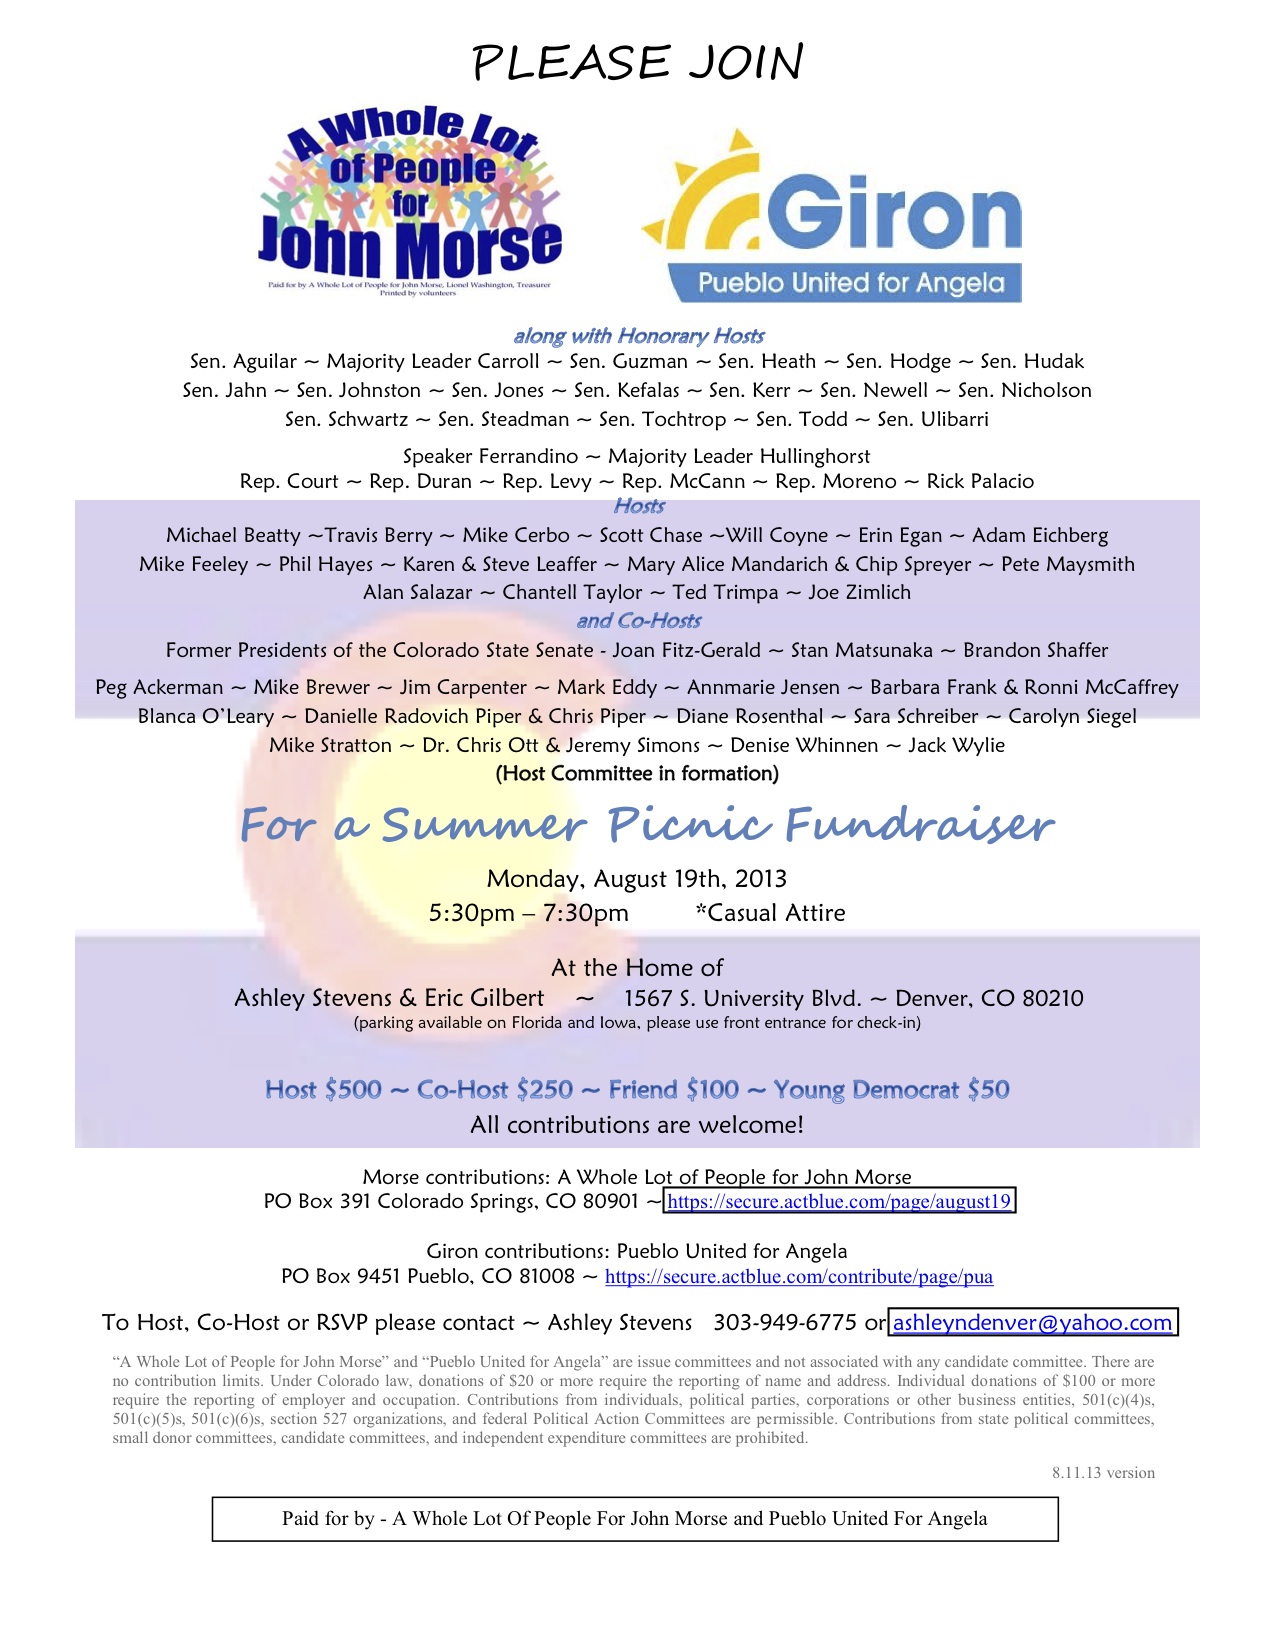 BIZARRO WORLD: Lobbyist Working For Colorado Sheriffs Hosting Fundraiser For Morse & Giron